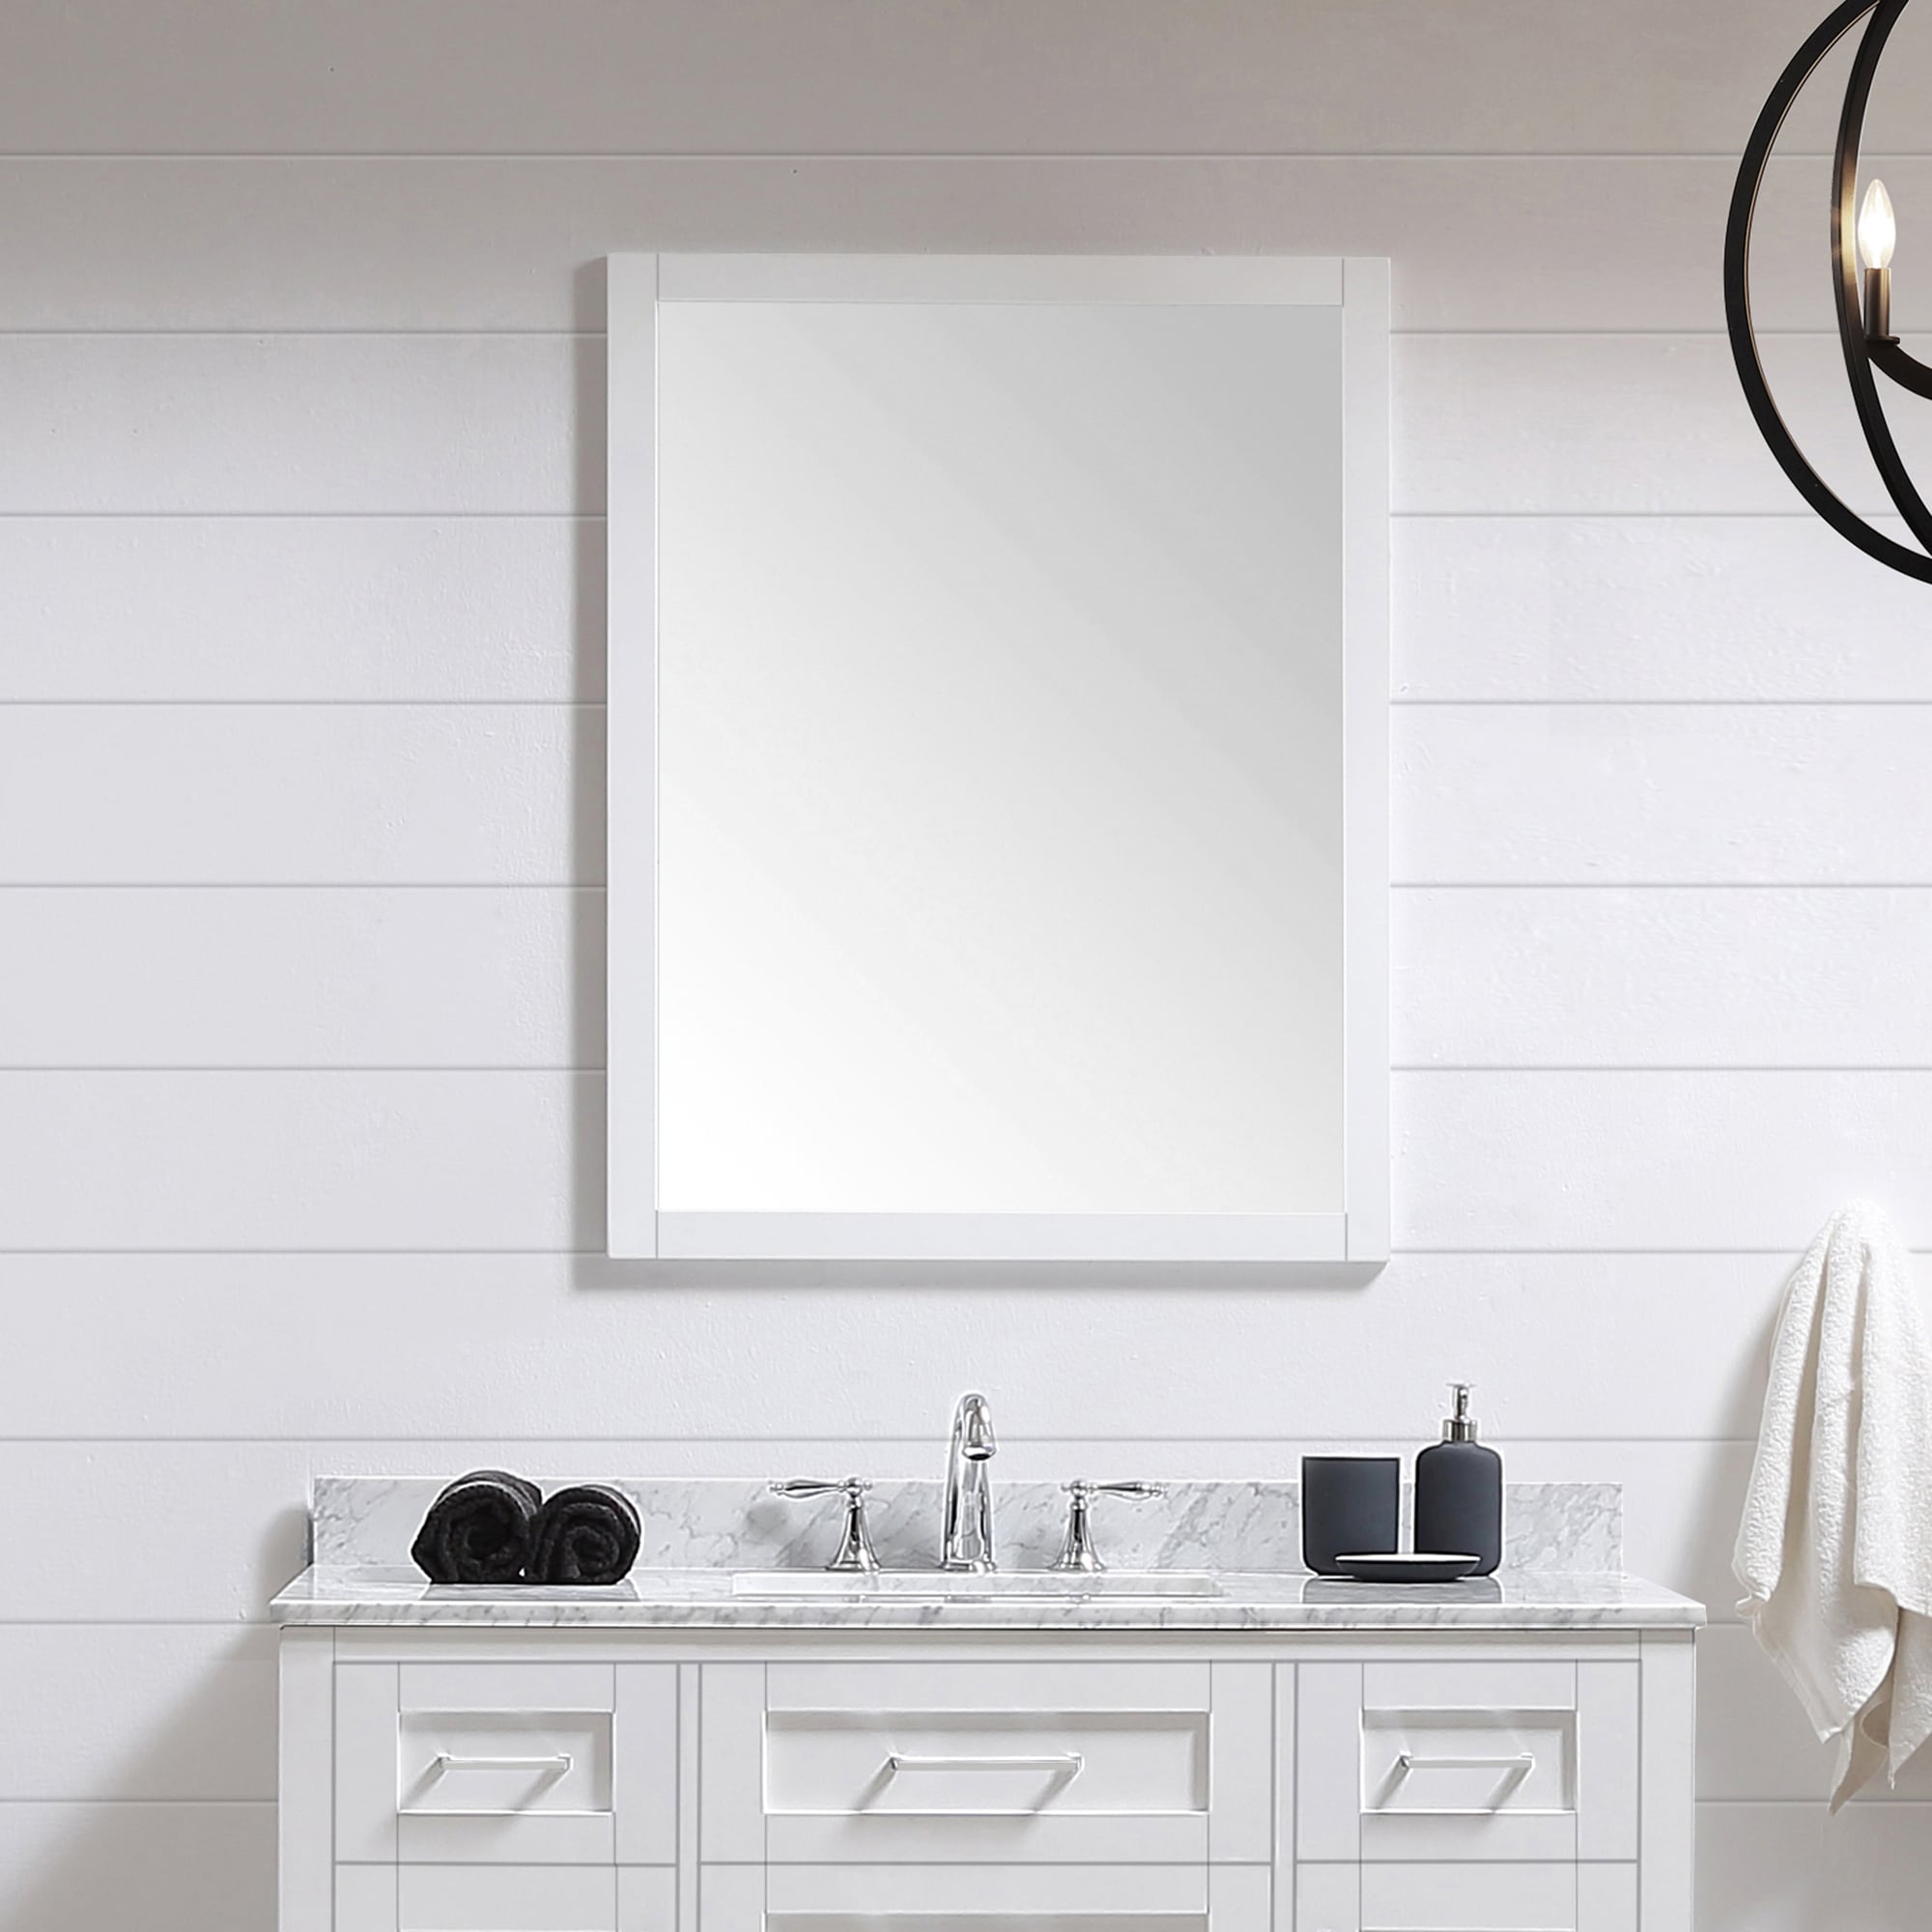 OVE Decors Tahoe 28-in x 36-in Framed Bathroom Vanity Mirror (White) in ...